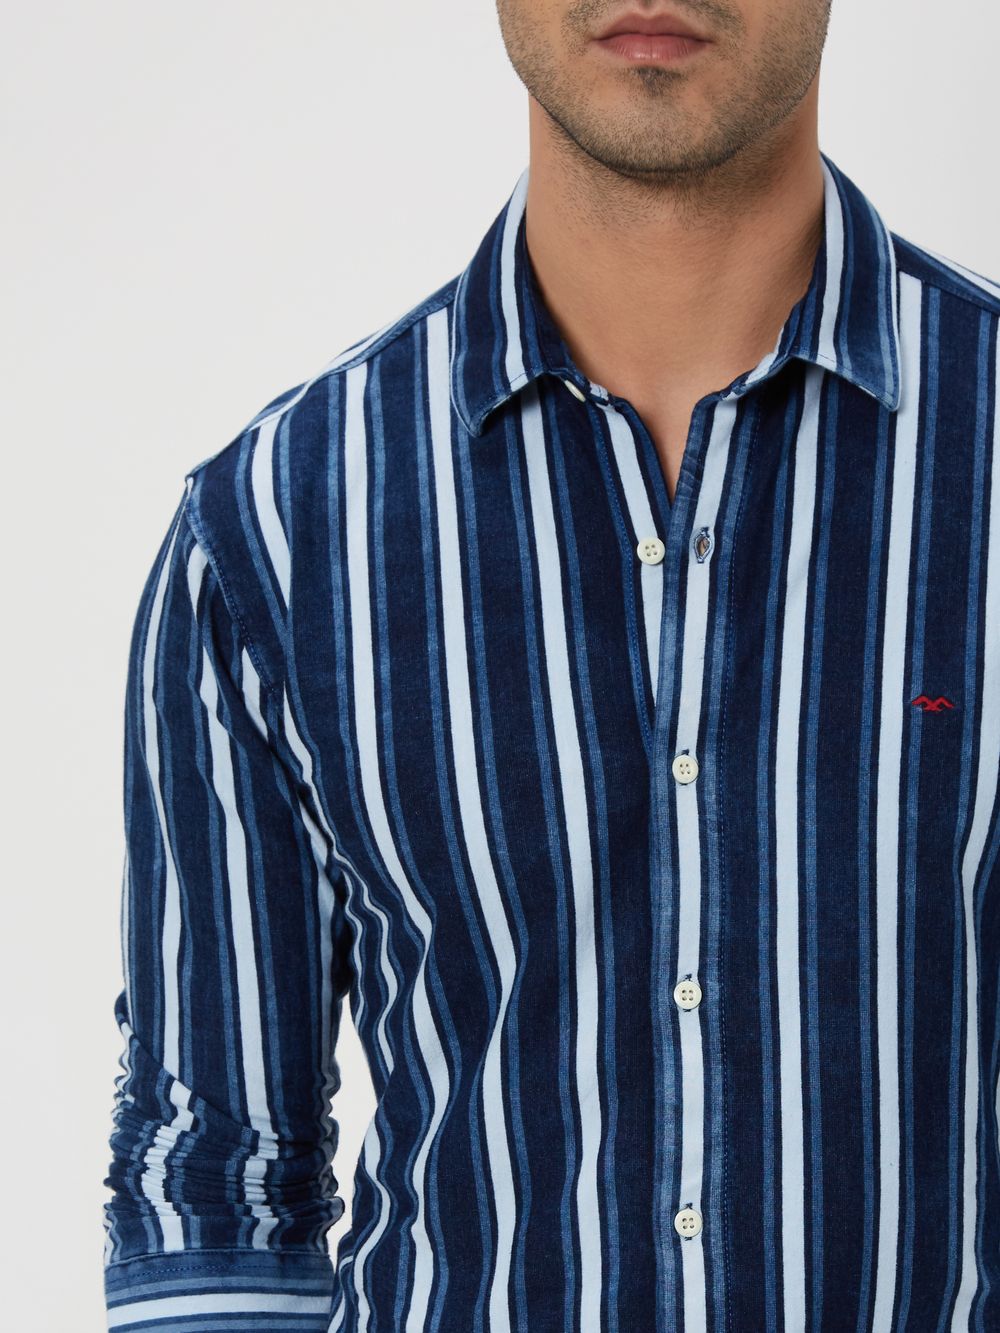 Indigo Blue & White Candy Stripe Shirt